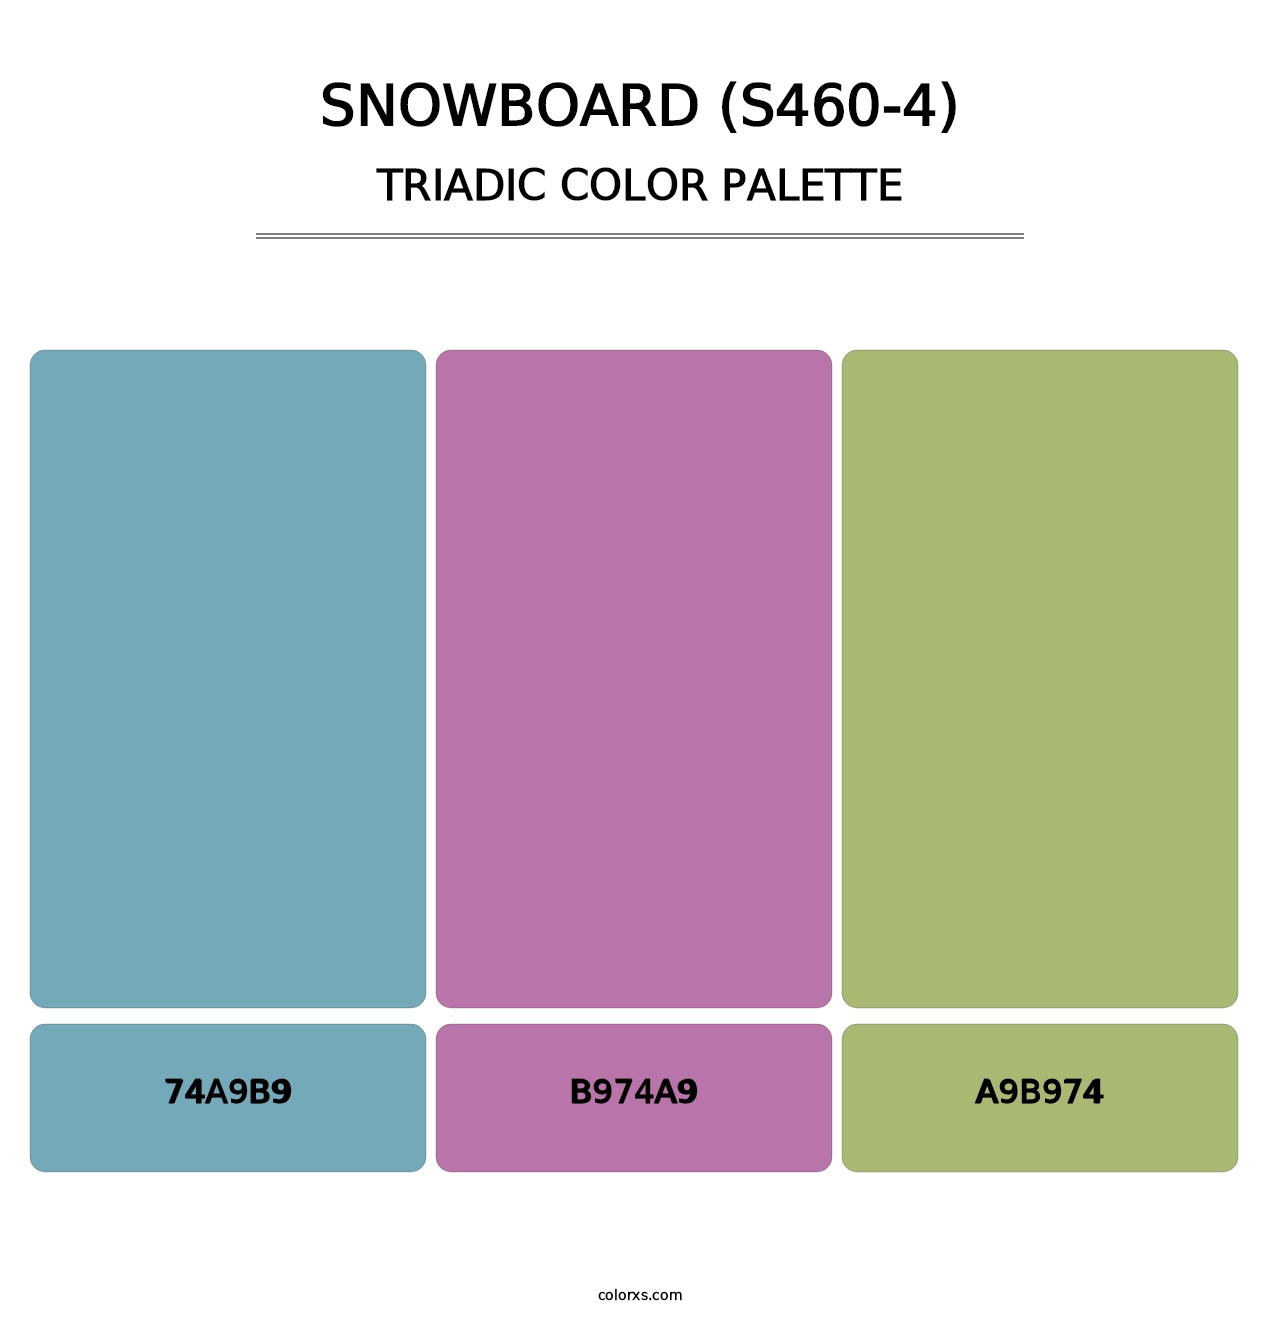 Snowboard (S460-4) - Triadic Color Palette